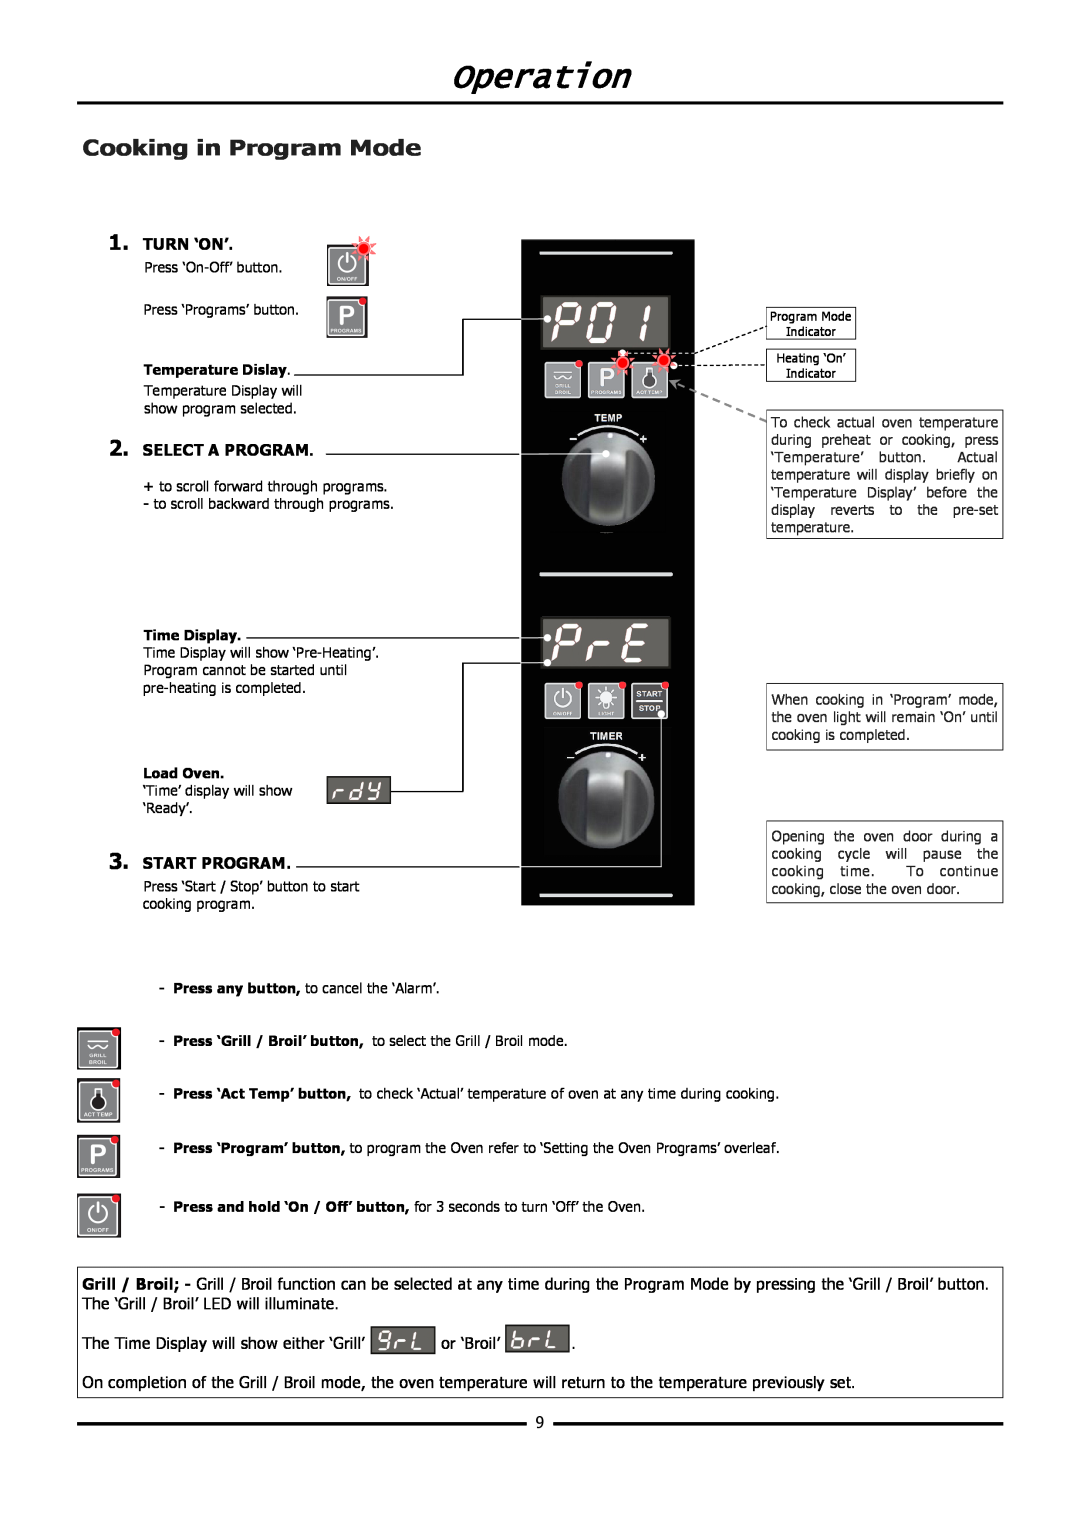 Moffat E31D4 operation manual Cooking in Program Mode, Operation, Turn ‘On’, Select A Program, Start Program 